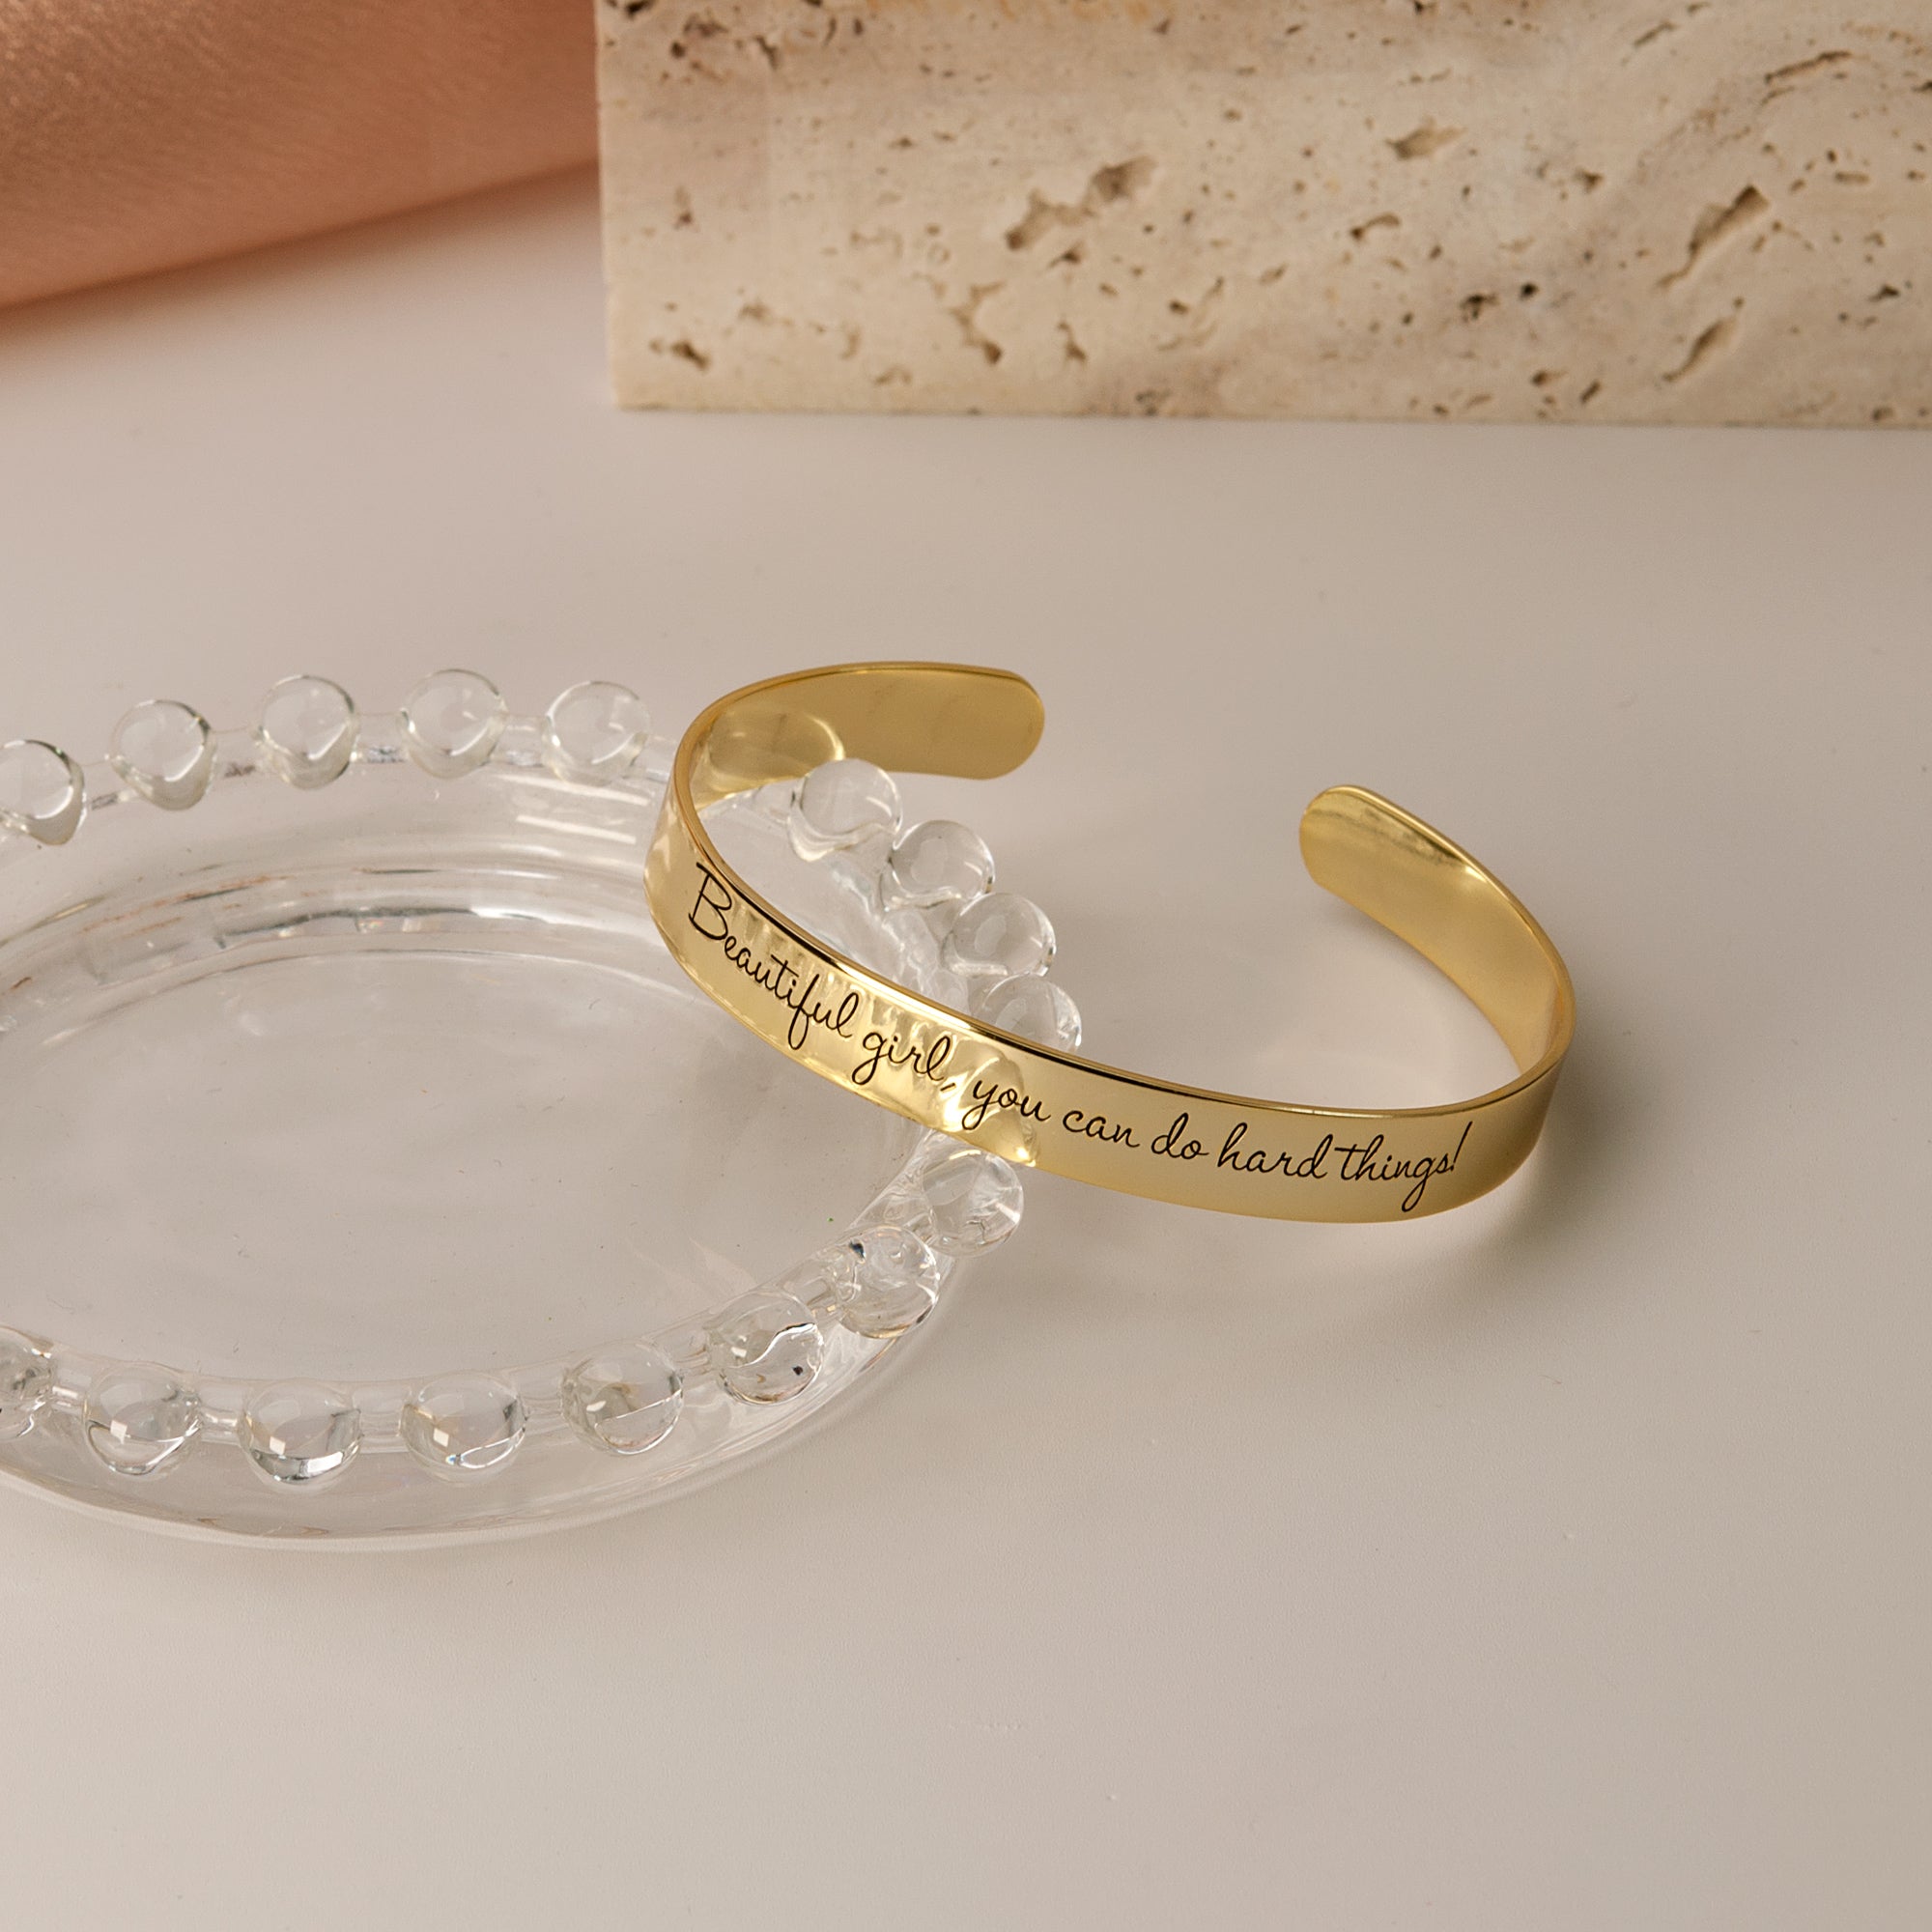 ZKXYFFS 925 Sterling Silver Bangle Bracelets for Women Silver Cuff Bangles  Adjustable Fashion Women Jewelry Bracelet for Girls Mom Wife Valentine